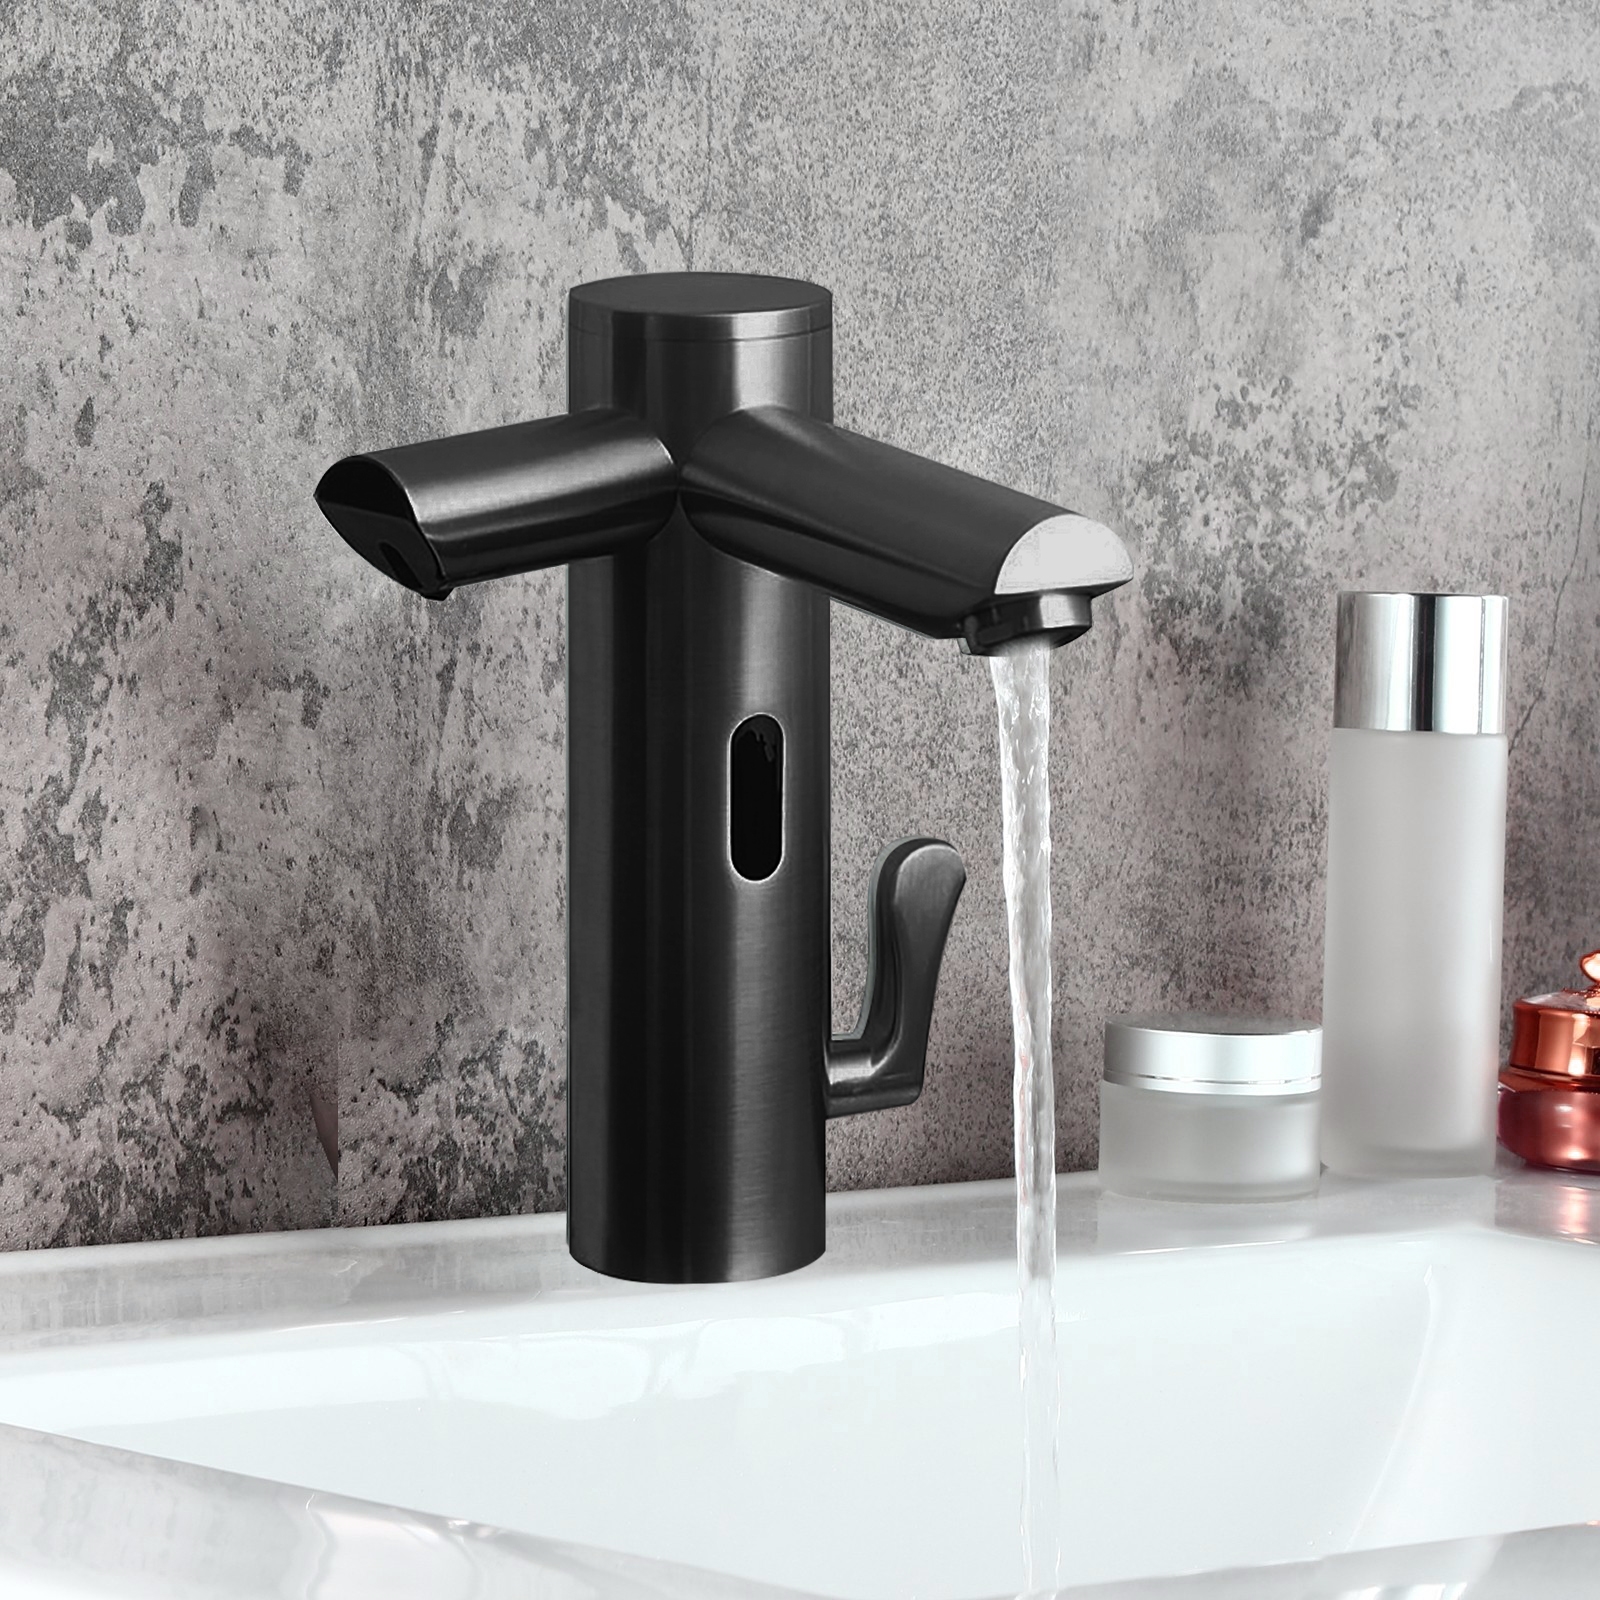 Lenox Commercial Dark Oil Rubbed Bronze Finish Dual Automatic Sensor Faucet With Sensor Soap Dispenser